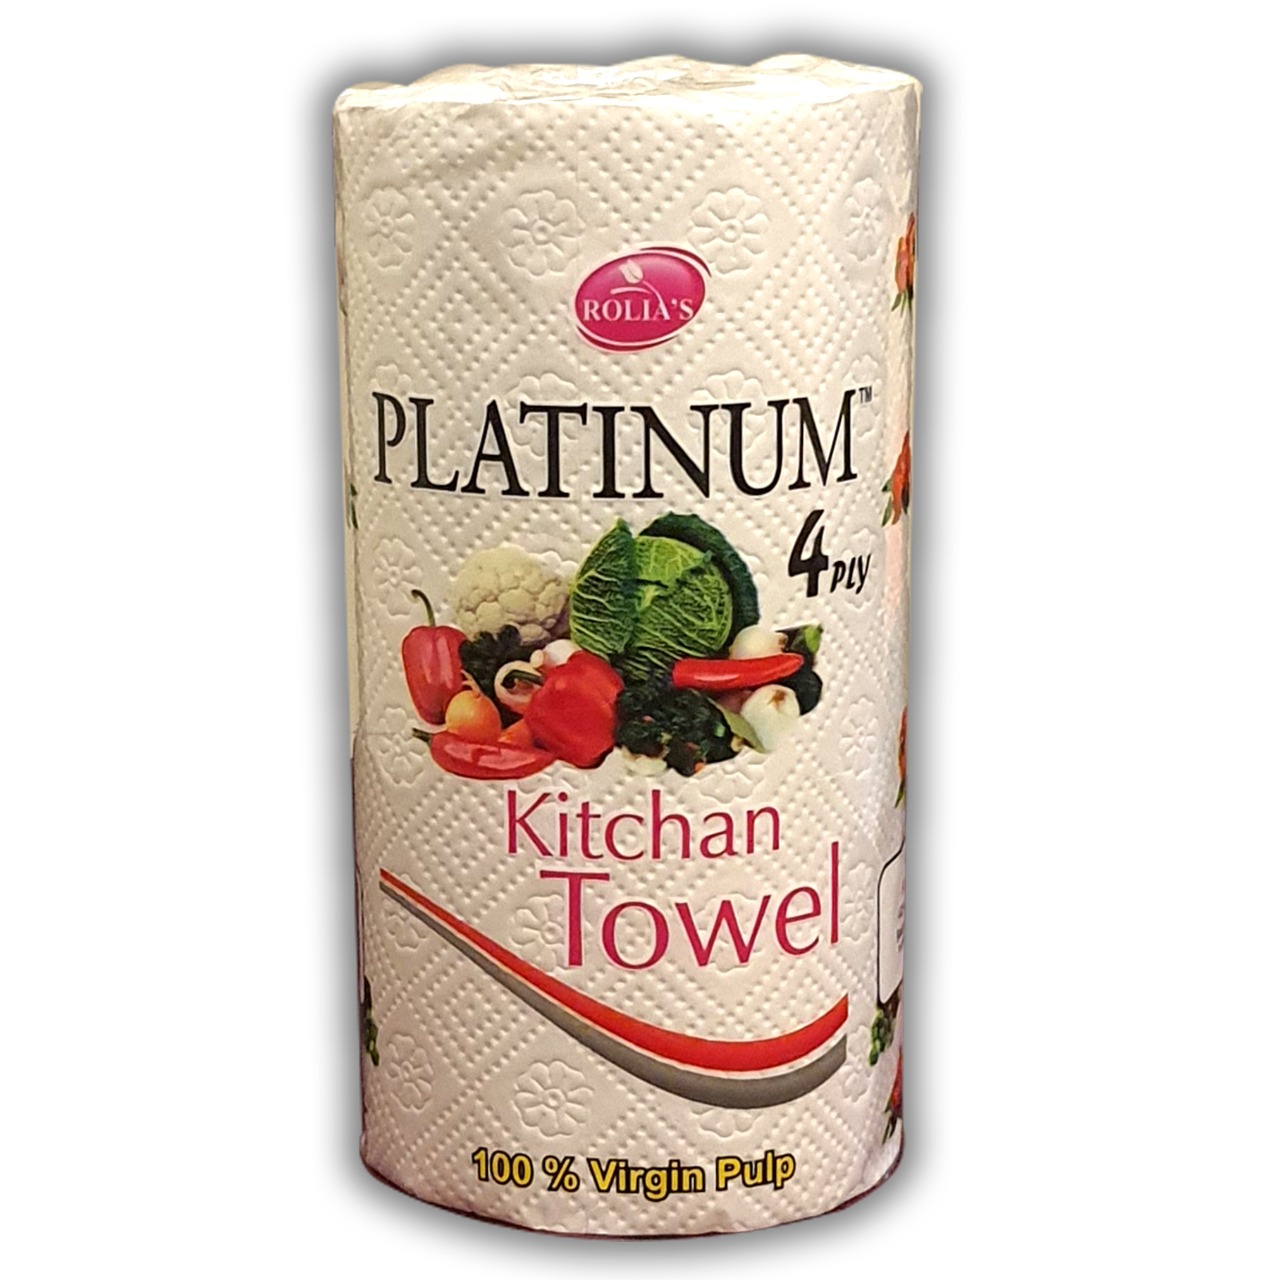 Platinum Kitchen Towel 4-Ply